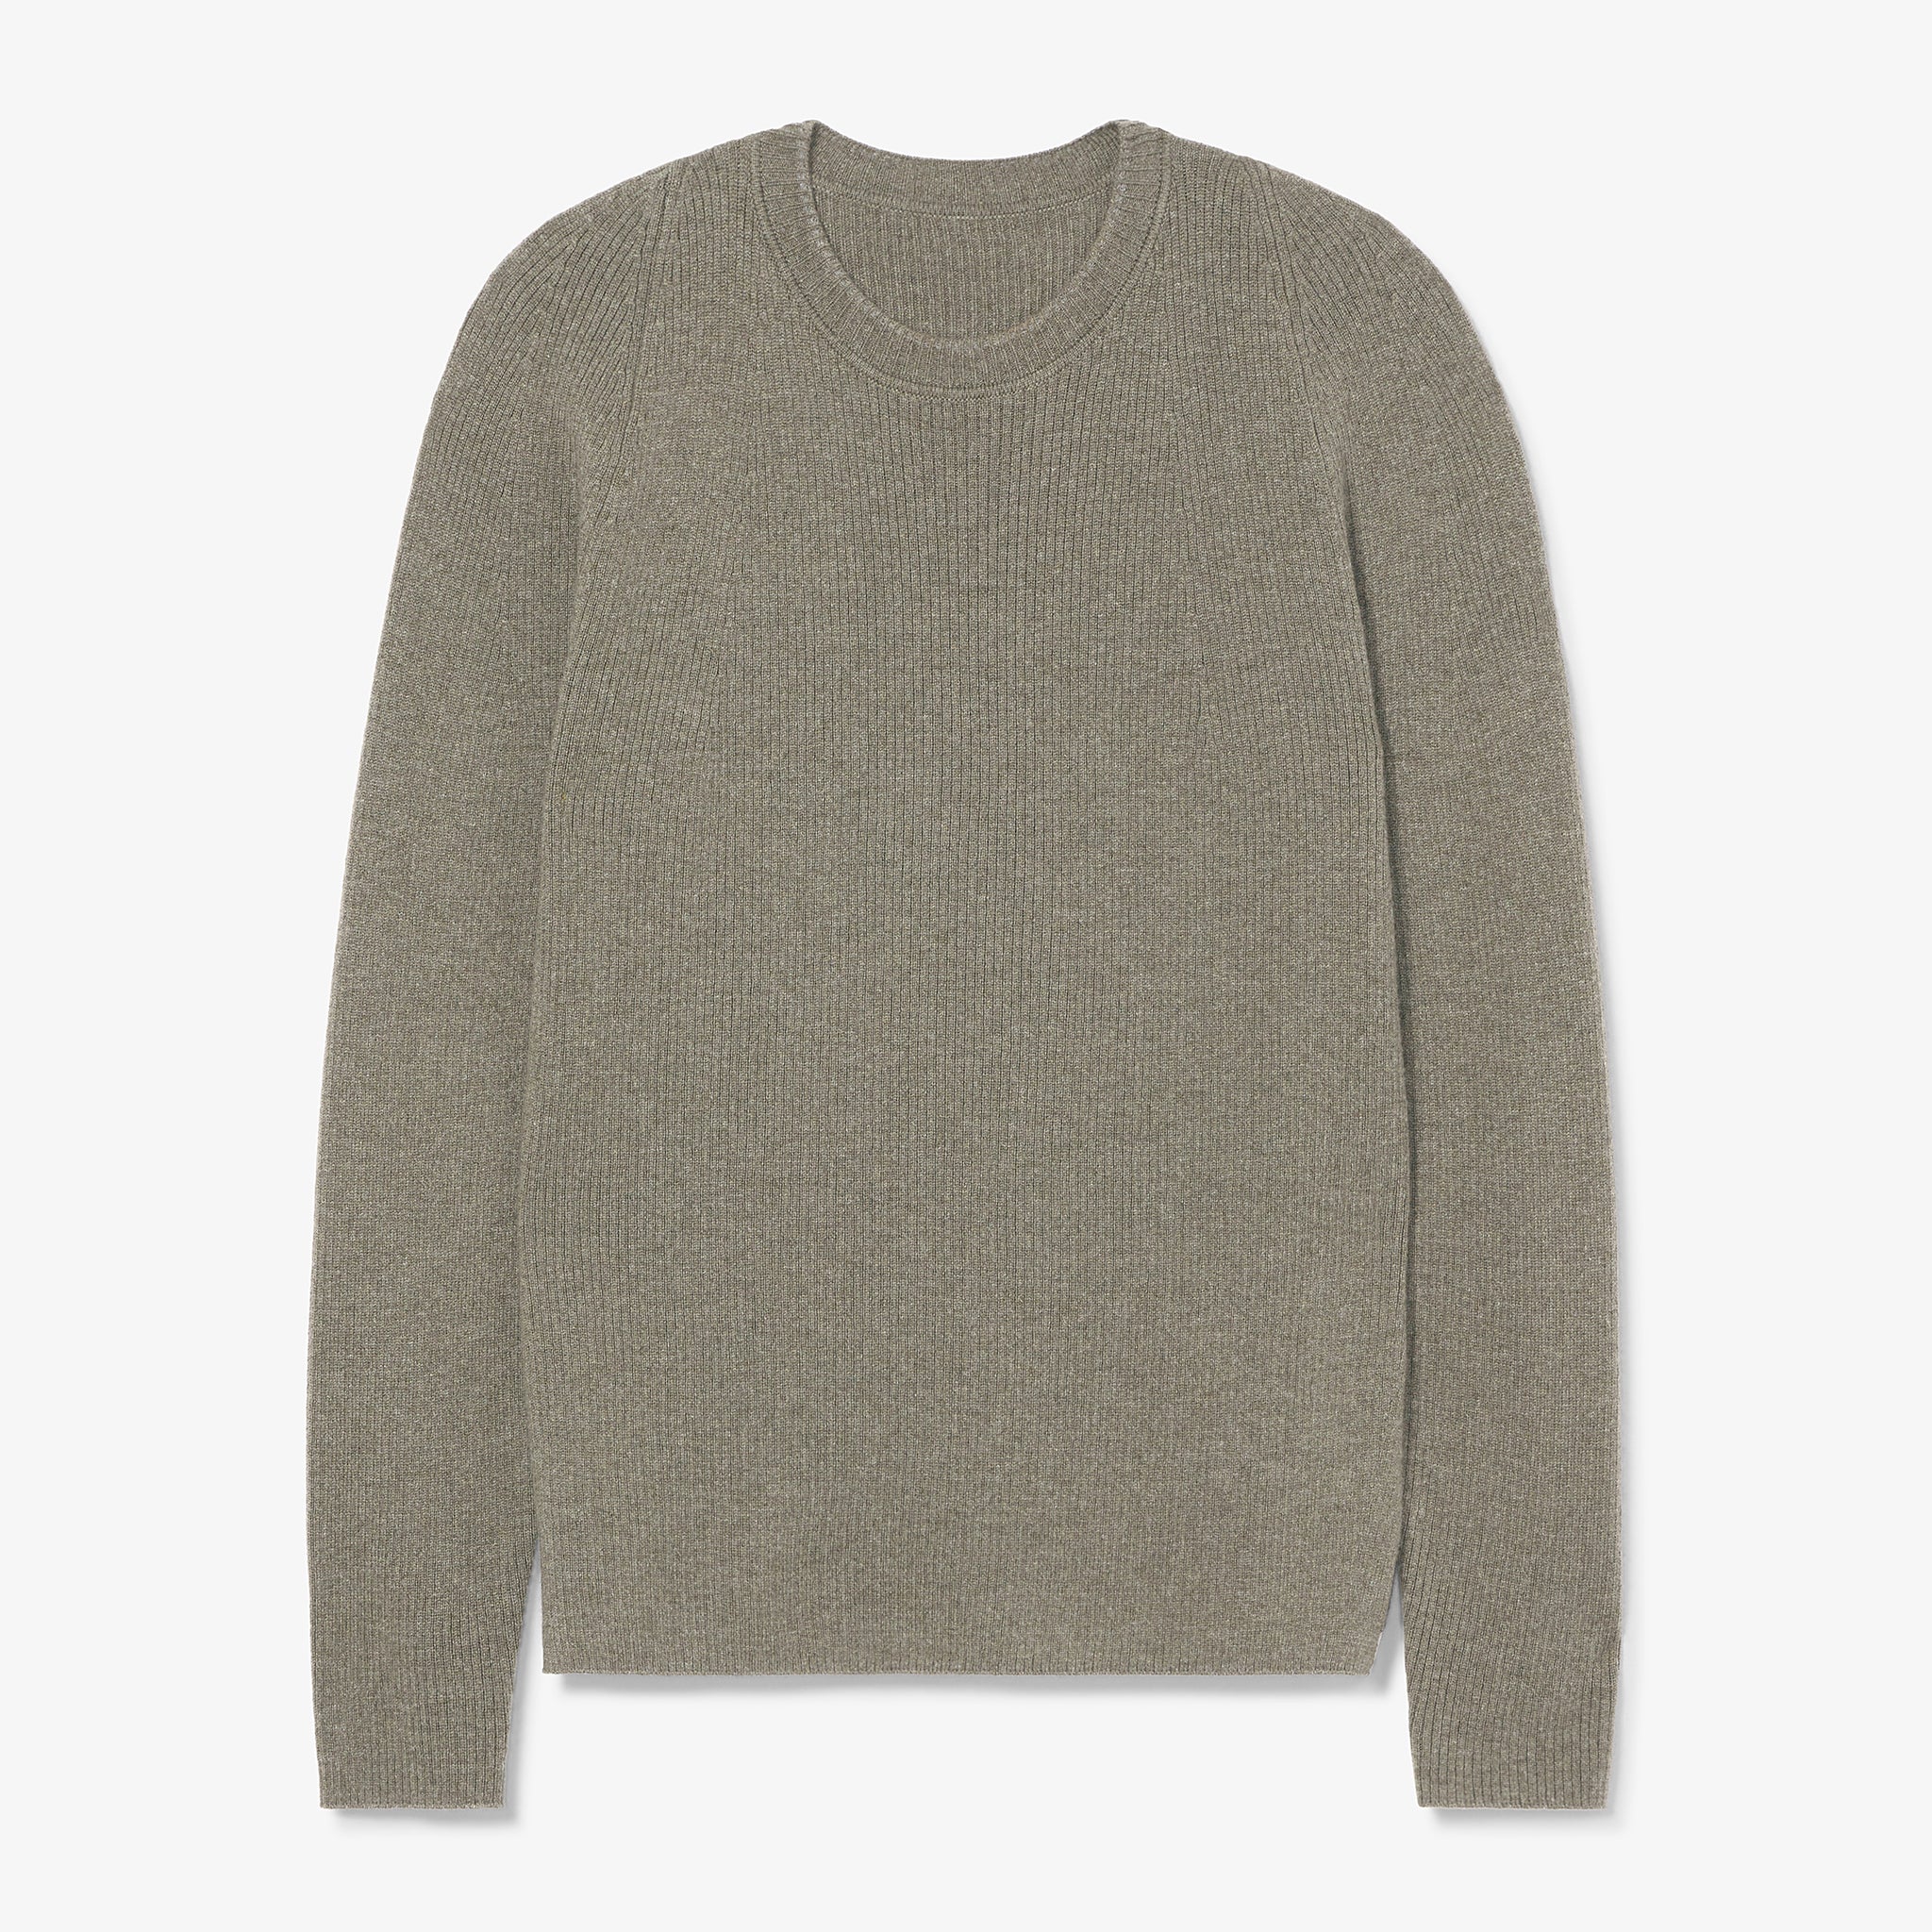 Packshot image of the ollie sweater in dark moss